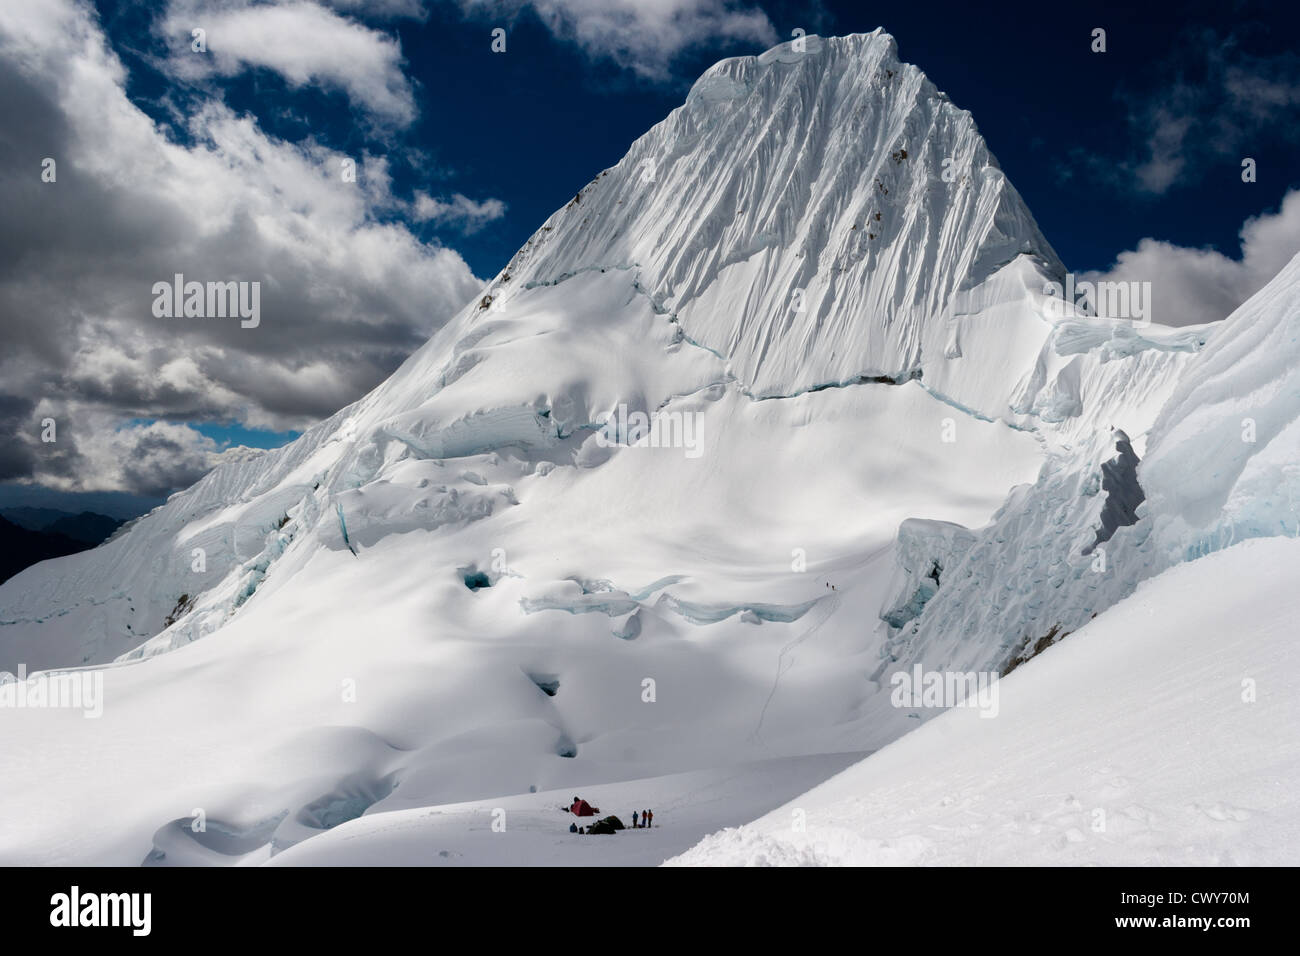 Nevado alpamayo hi-res stock photography and images - Alamy